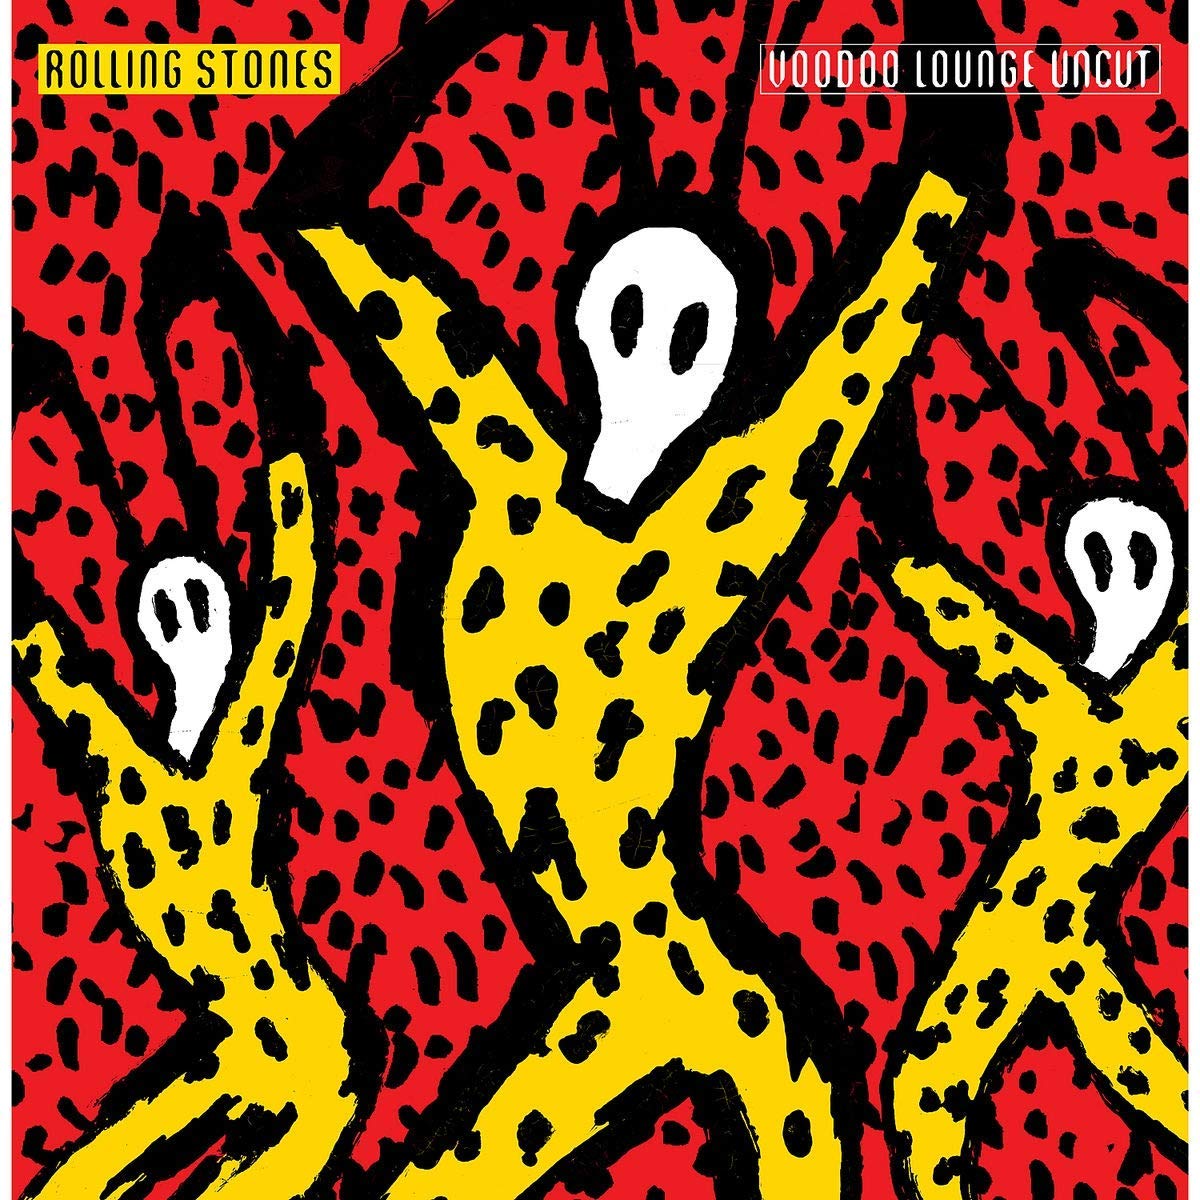 Rolling Stones - Voodoo Lounge Uncut - 2CD/BluRay